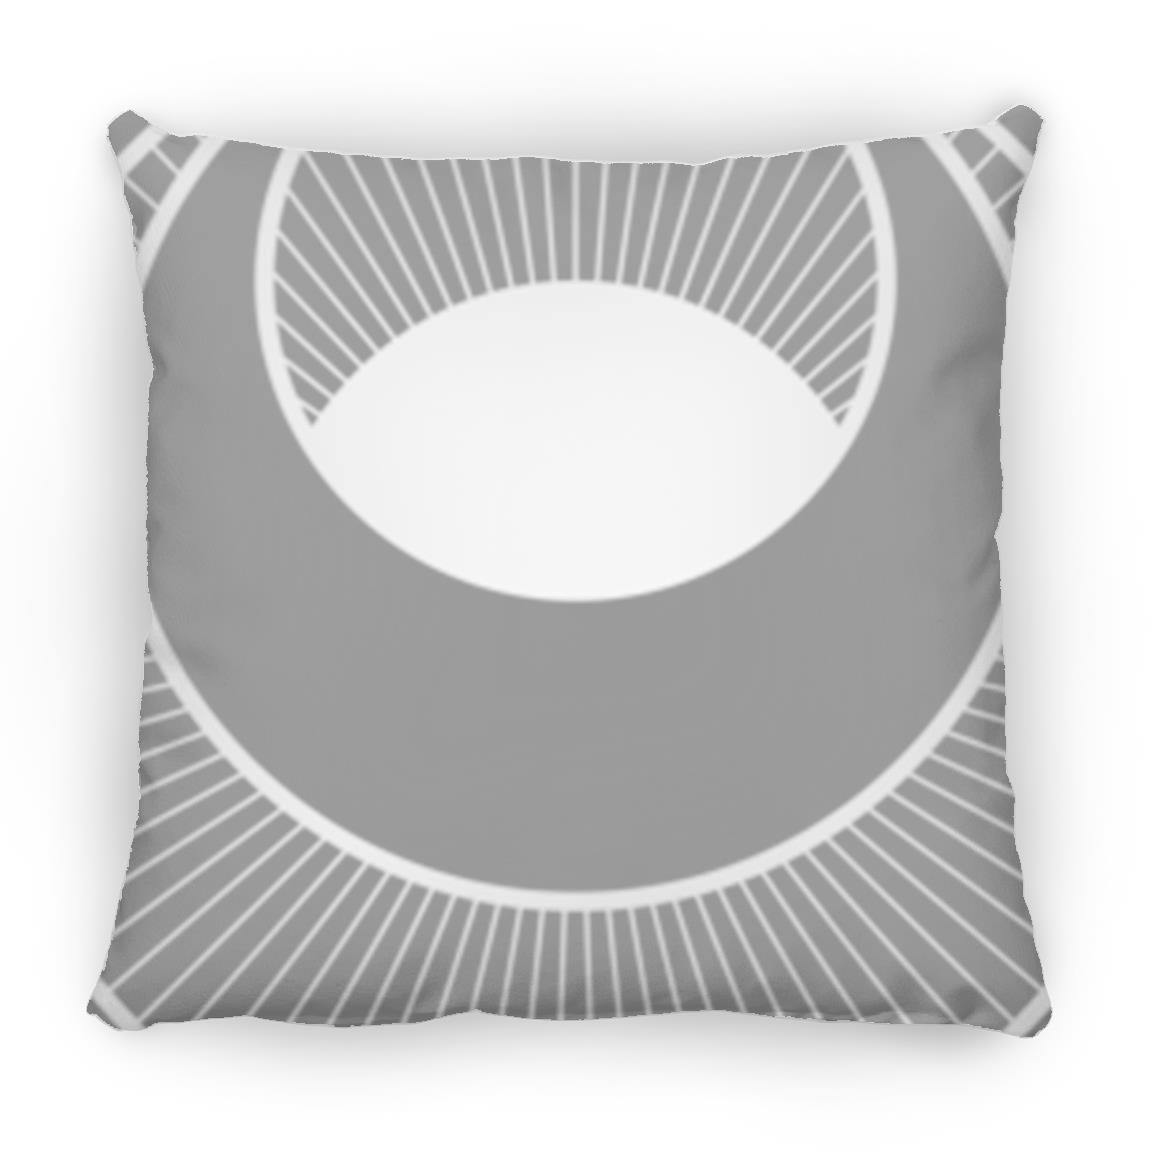 Crop Circle Pillow - Morgan´s Hill 2 - Shapes of Wisdom